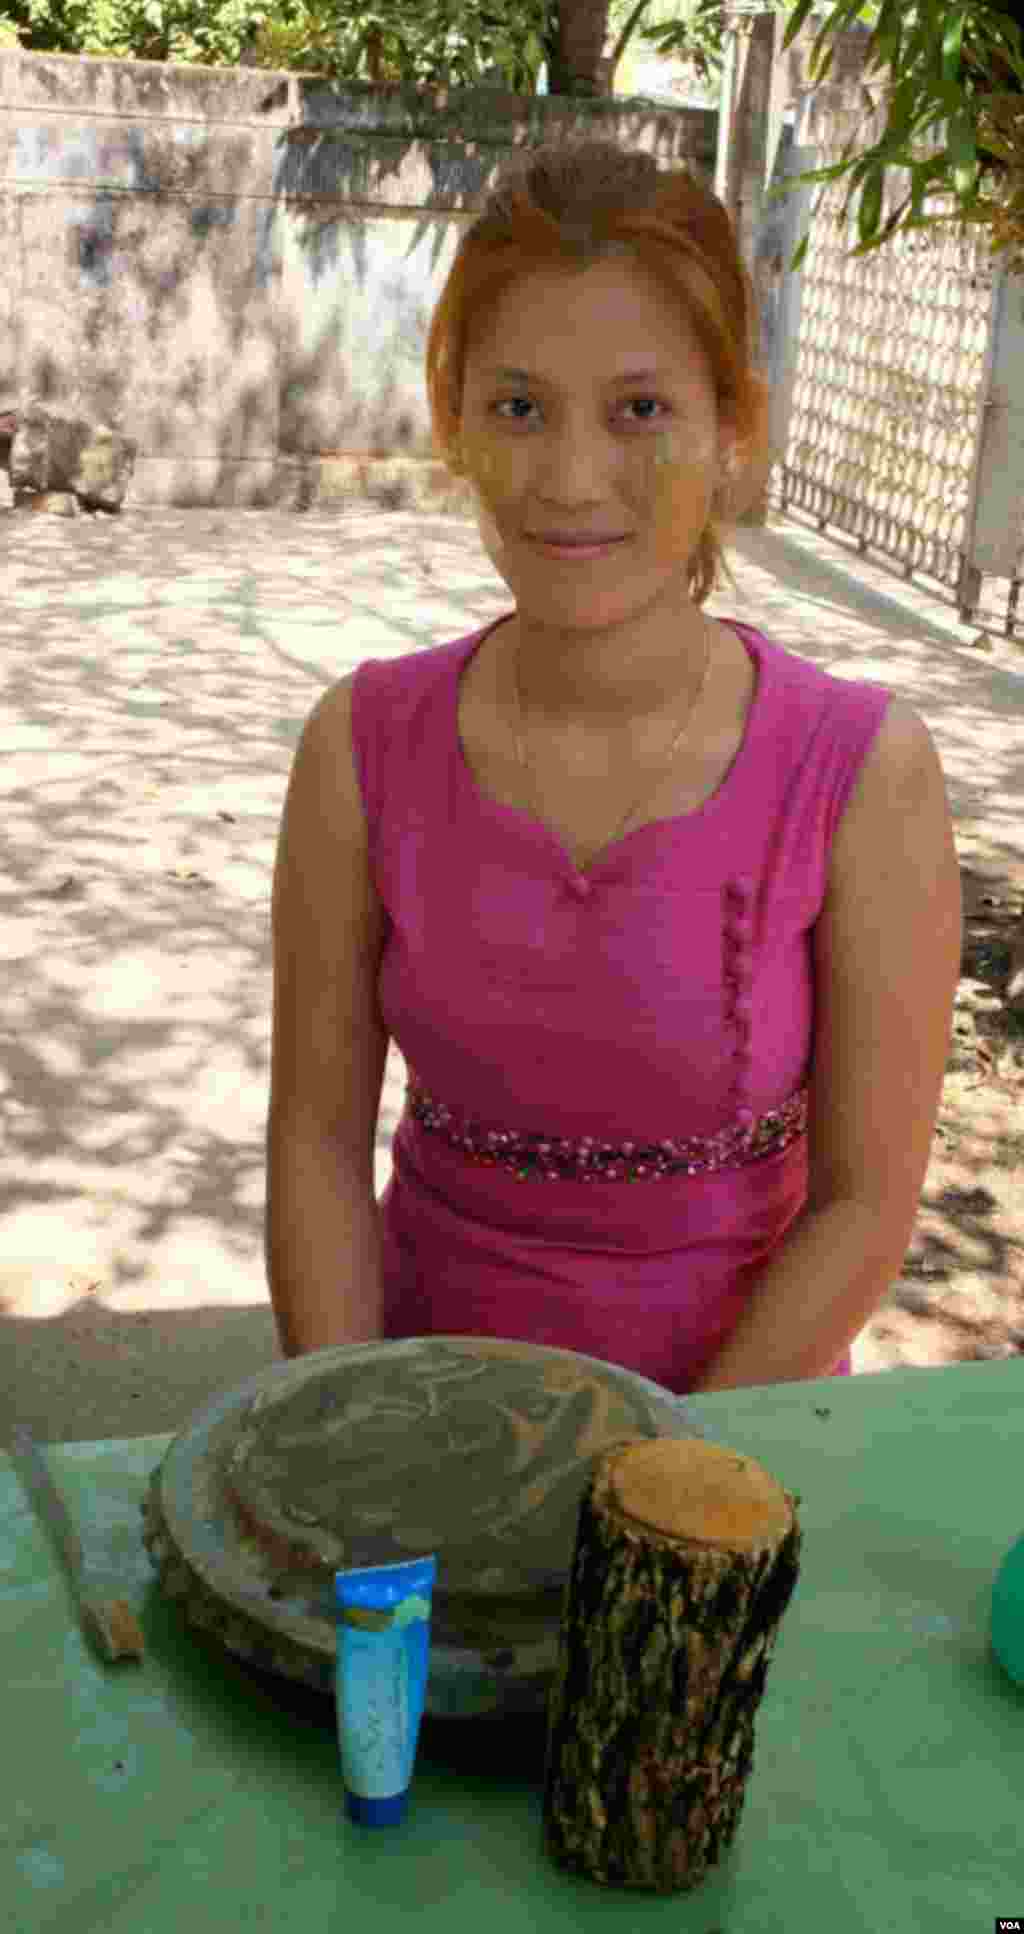 A woman poses with freshly made thanaka next to a tube of pre-made thanaka cream. (Steve Herman/VOA News)